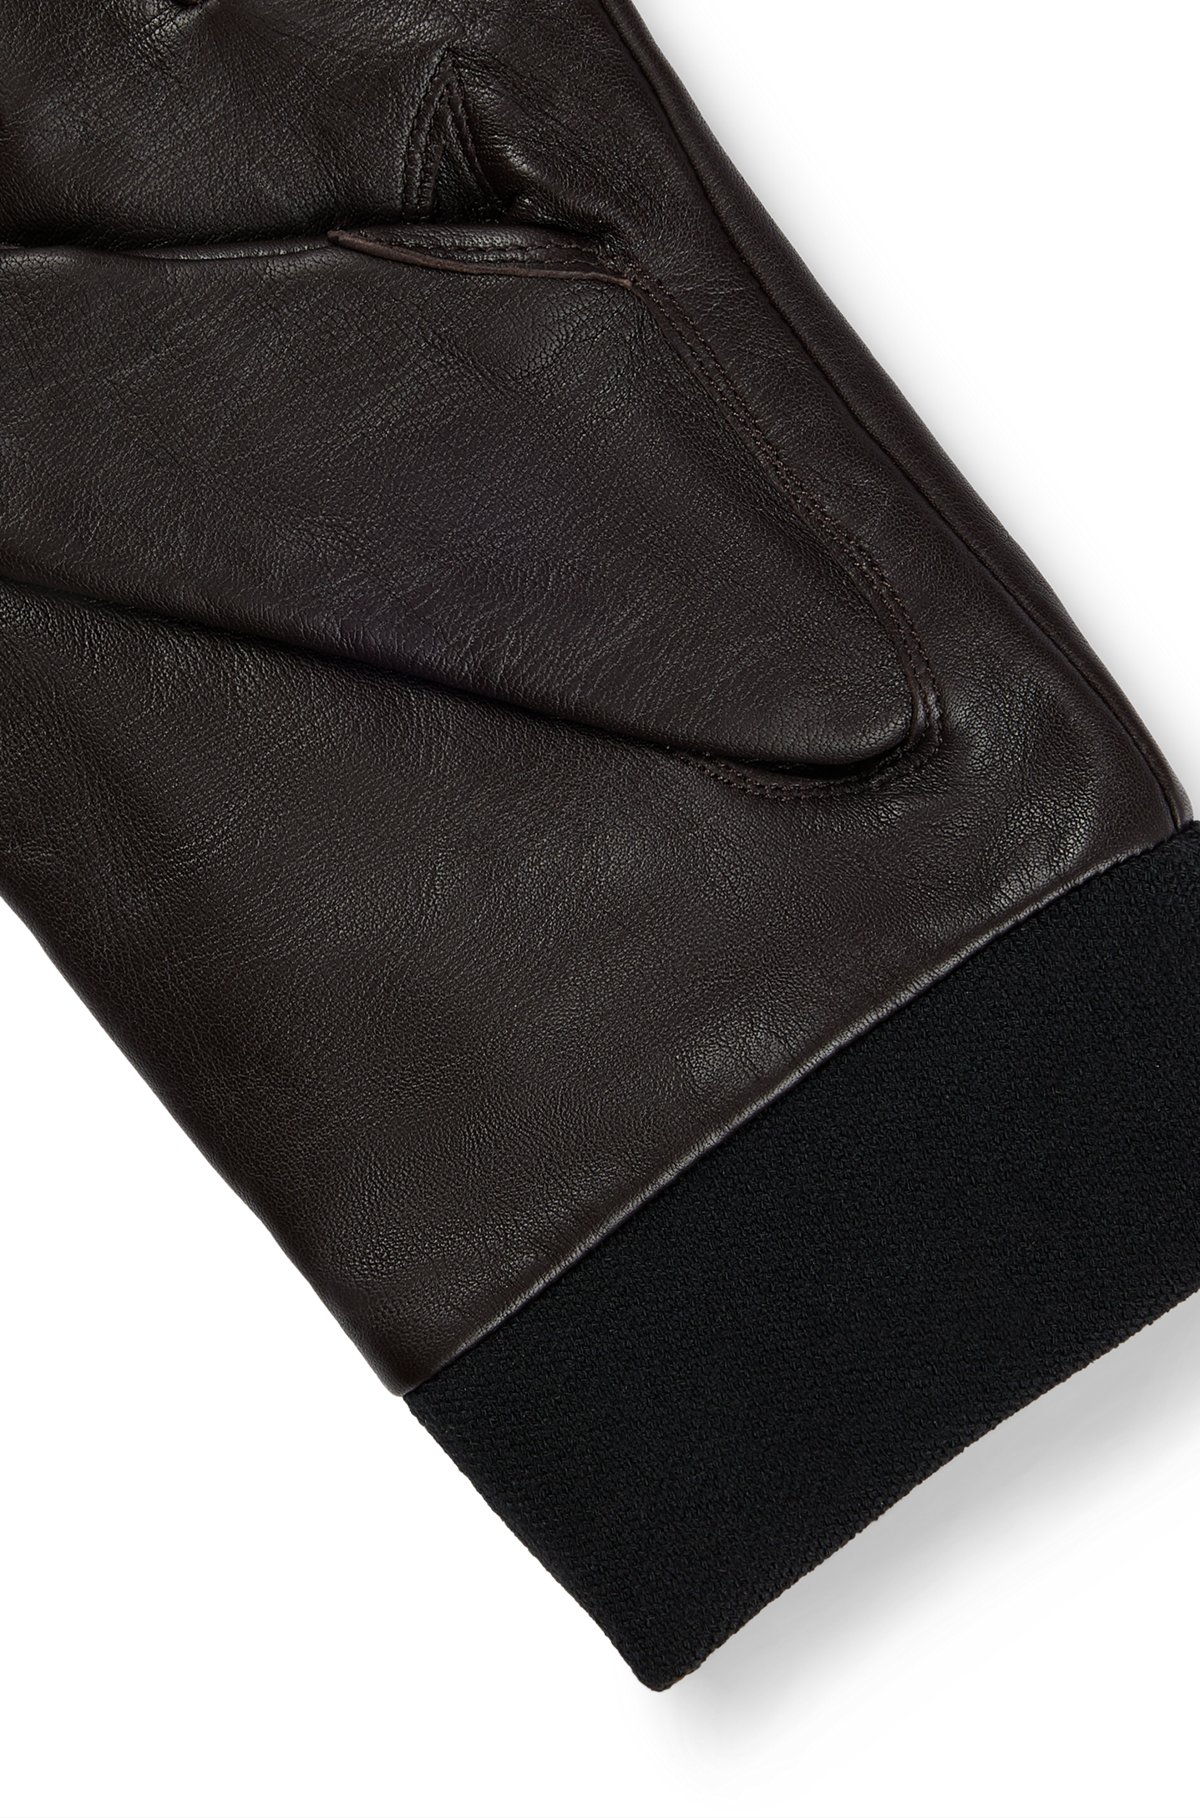 Læderhandsker med branding og touchscreen-venlige fingerspidser, Mørkebrun